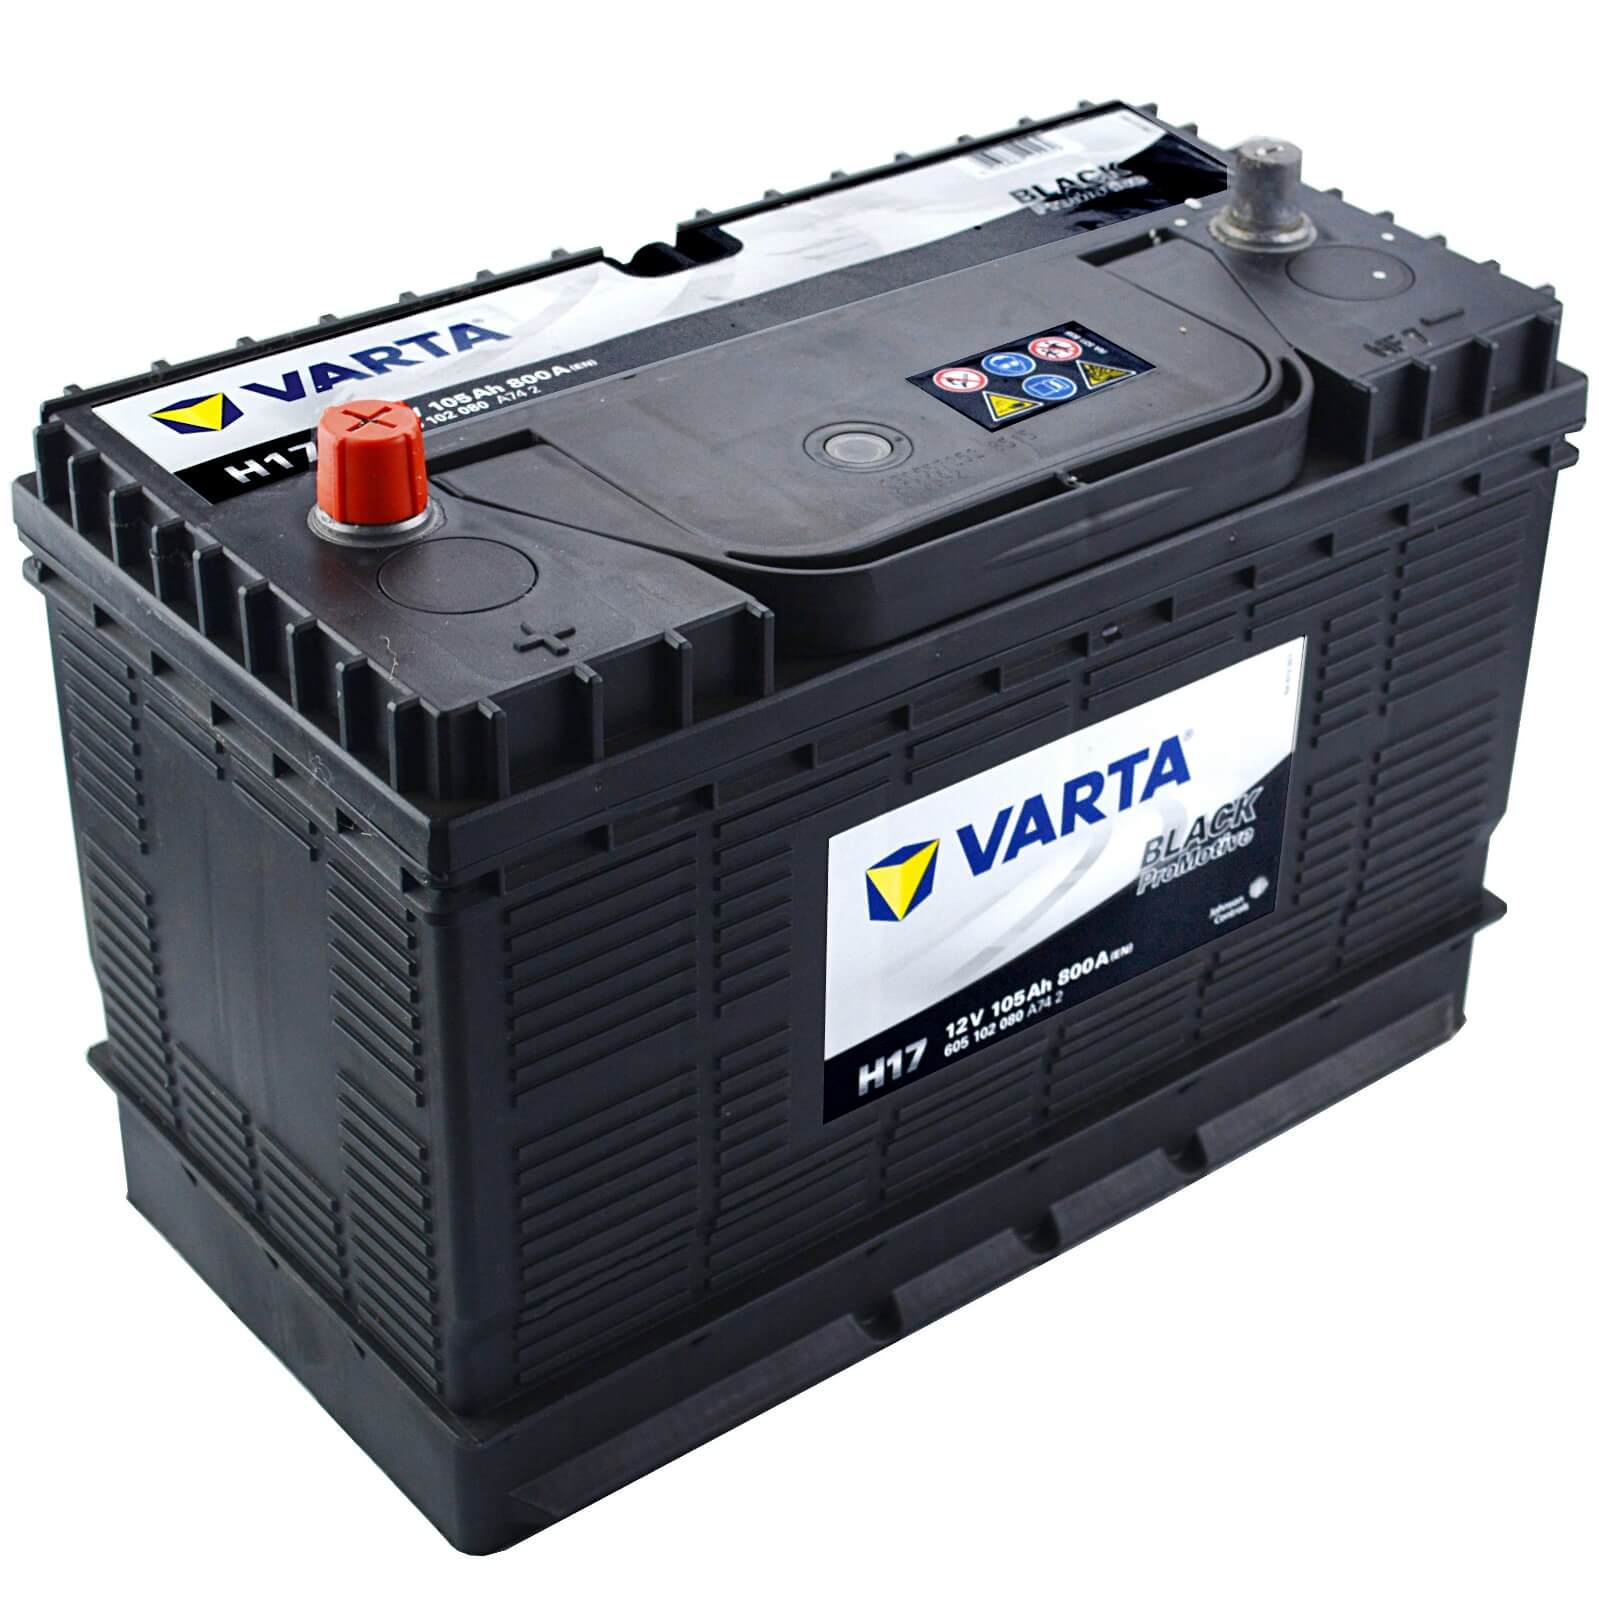 Batterie 643107090A742 VARTA Promotive Black, K11 12V 143Ah 900A B01 HEAVY  DUTY [erhöhte Zyklen- und Rüttelfestigkeit], Bleiakkumulator ➤ VARTA K11  günstig online